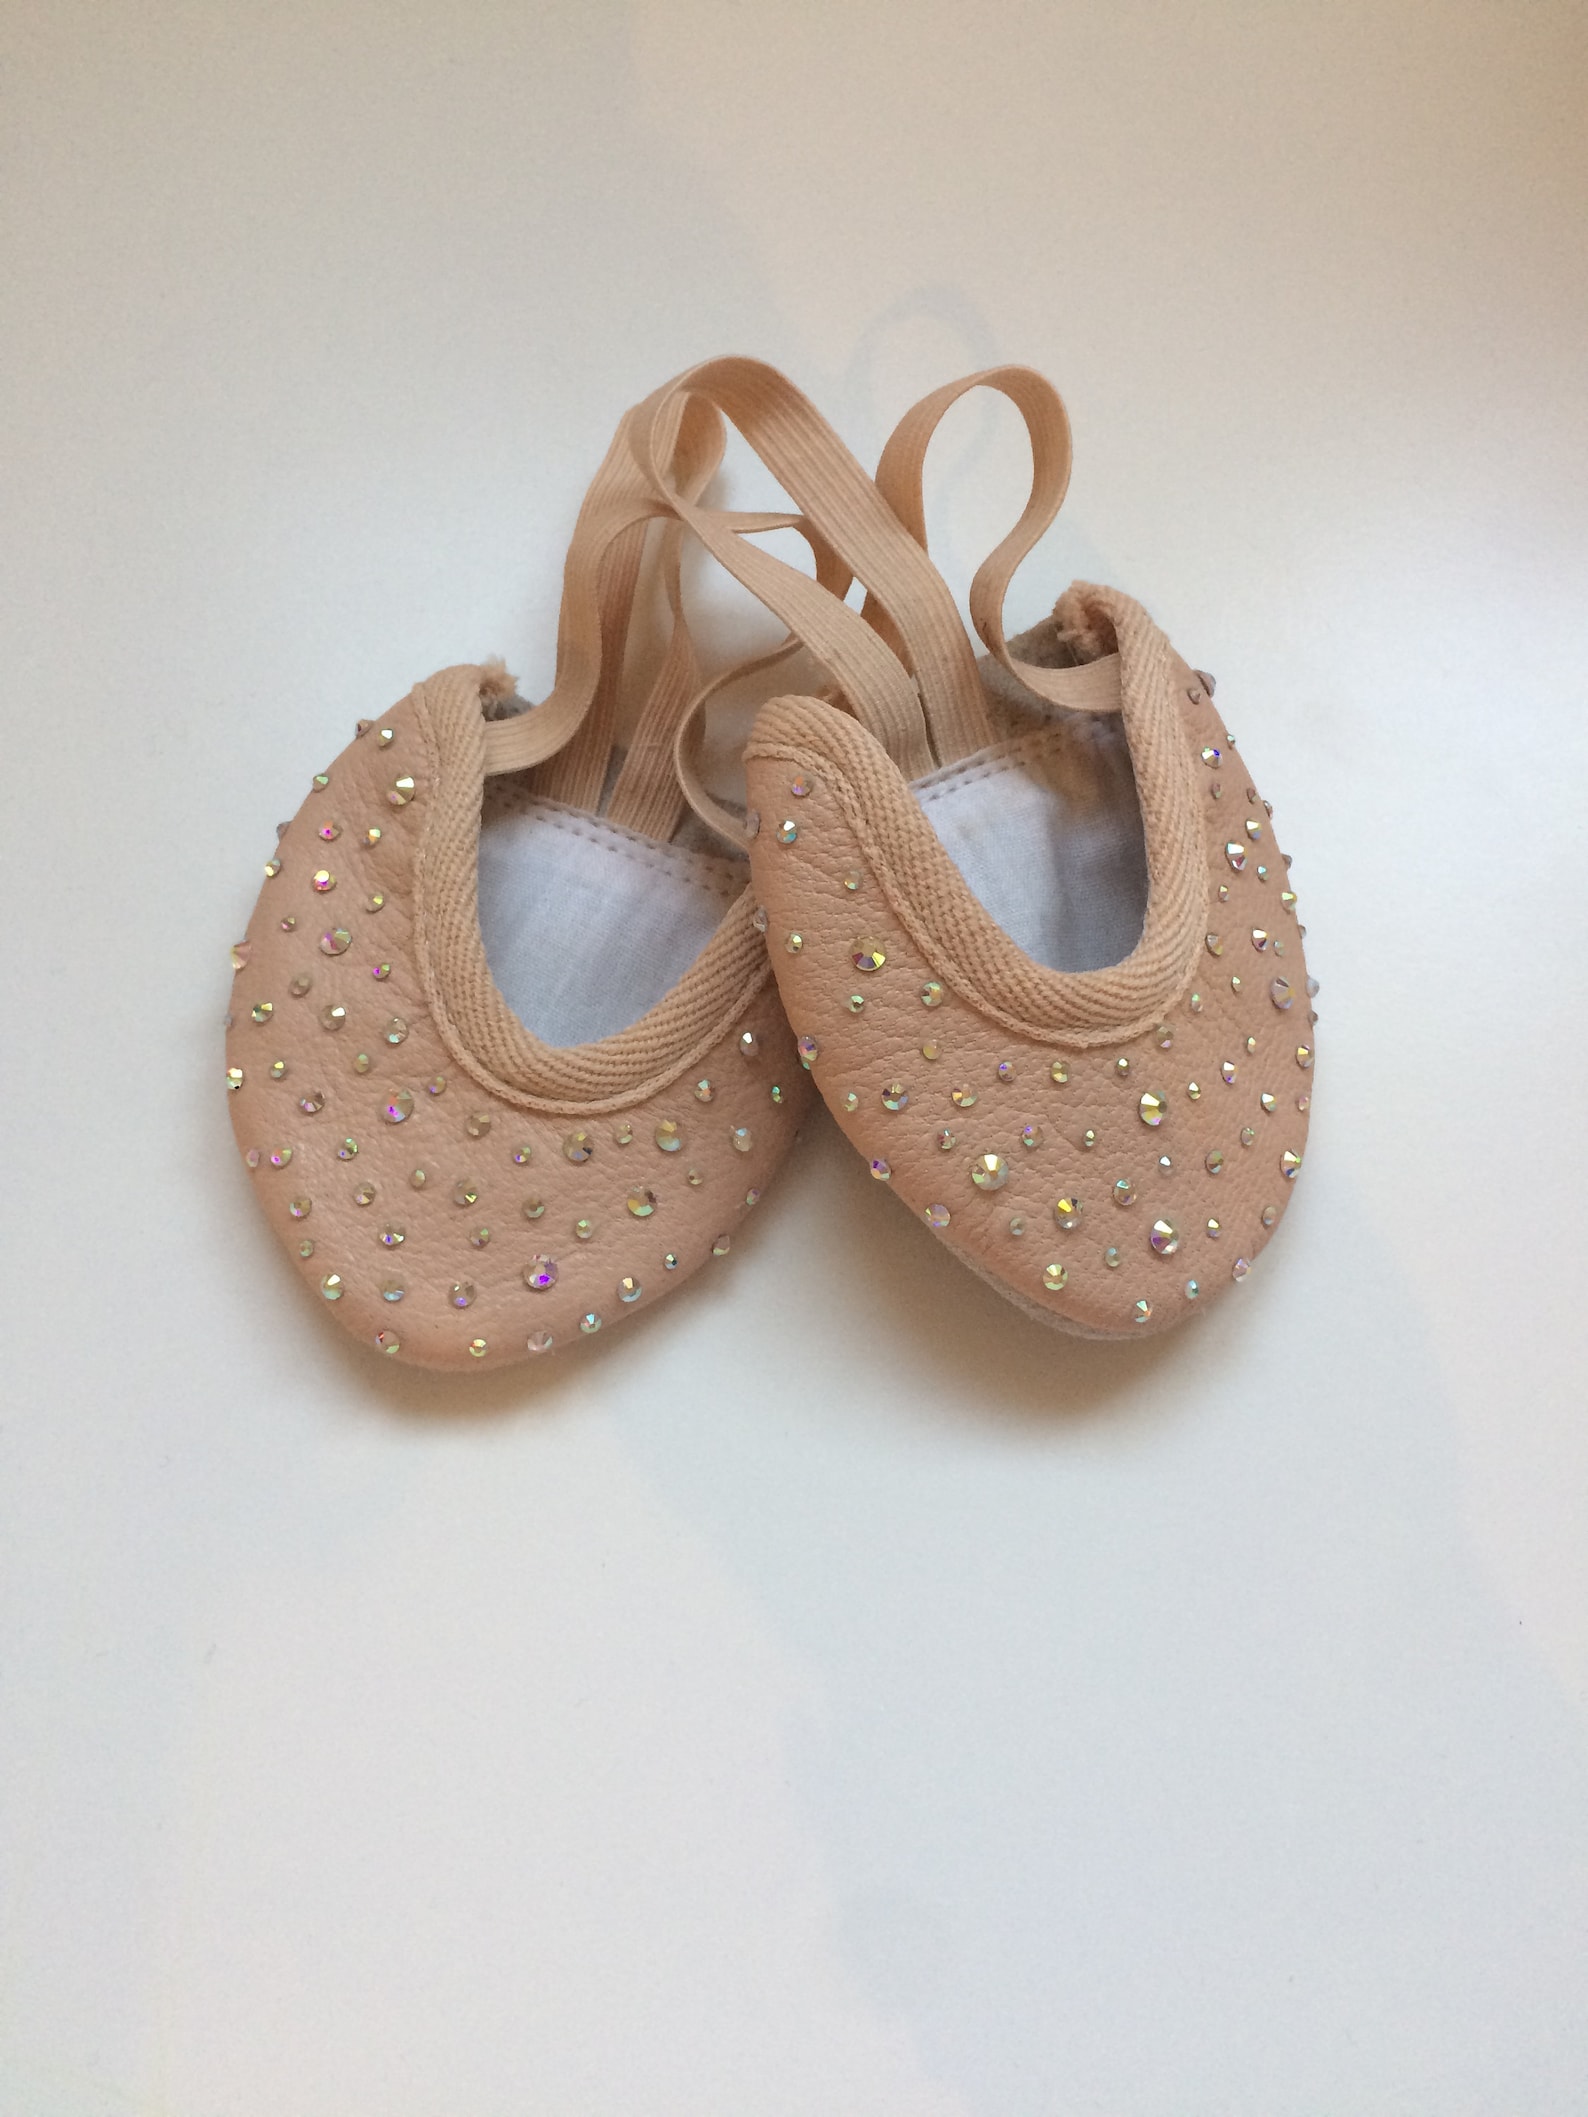 diamante toe shoes half shoes ballet rhythmic gymnastics lyrical dance all sizes